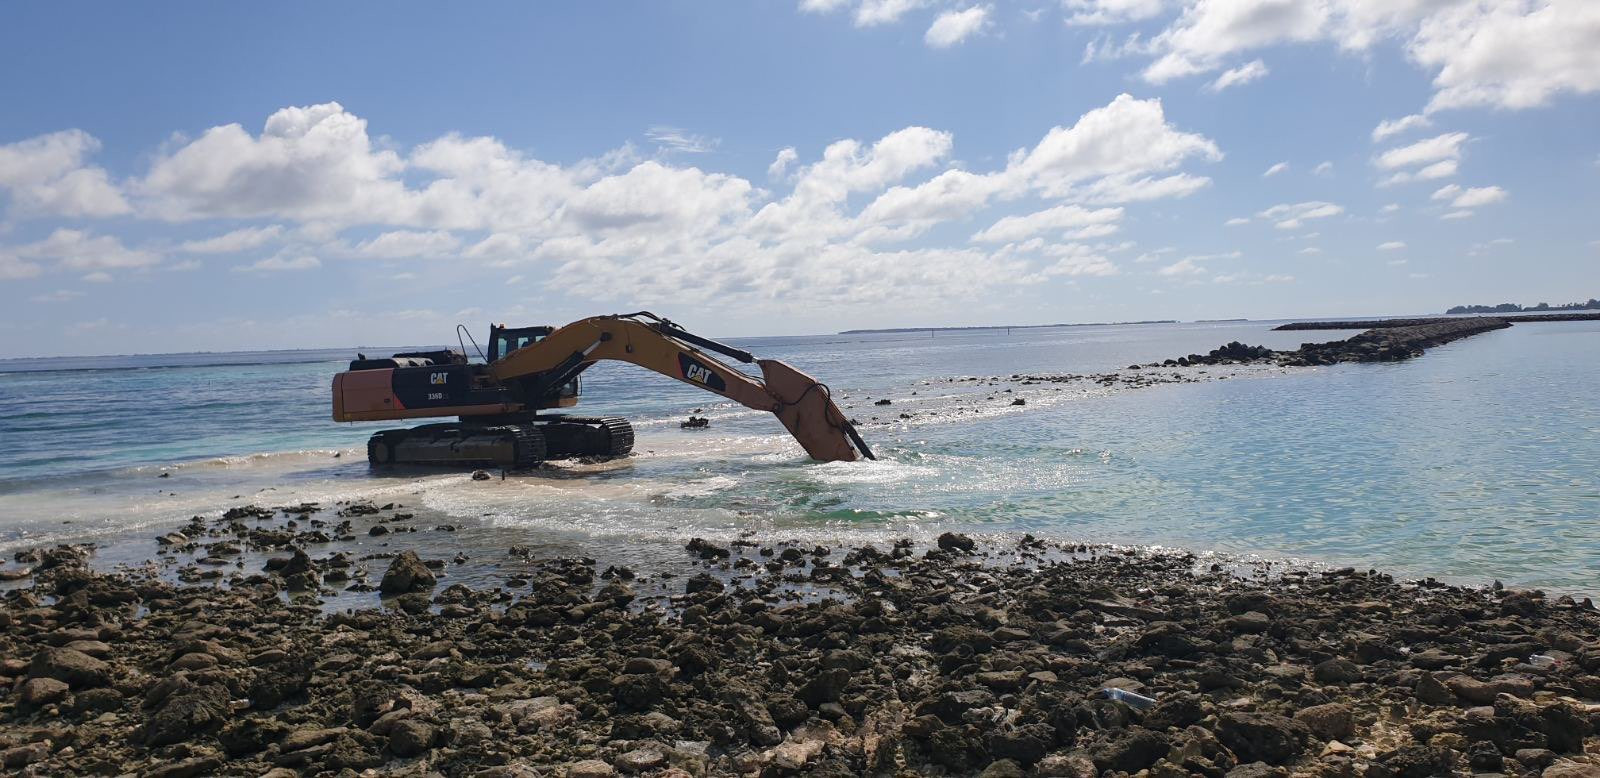 Infrastructure Development Destroying our Islands